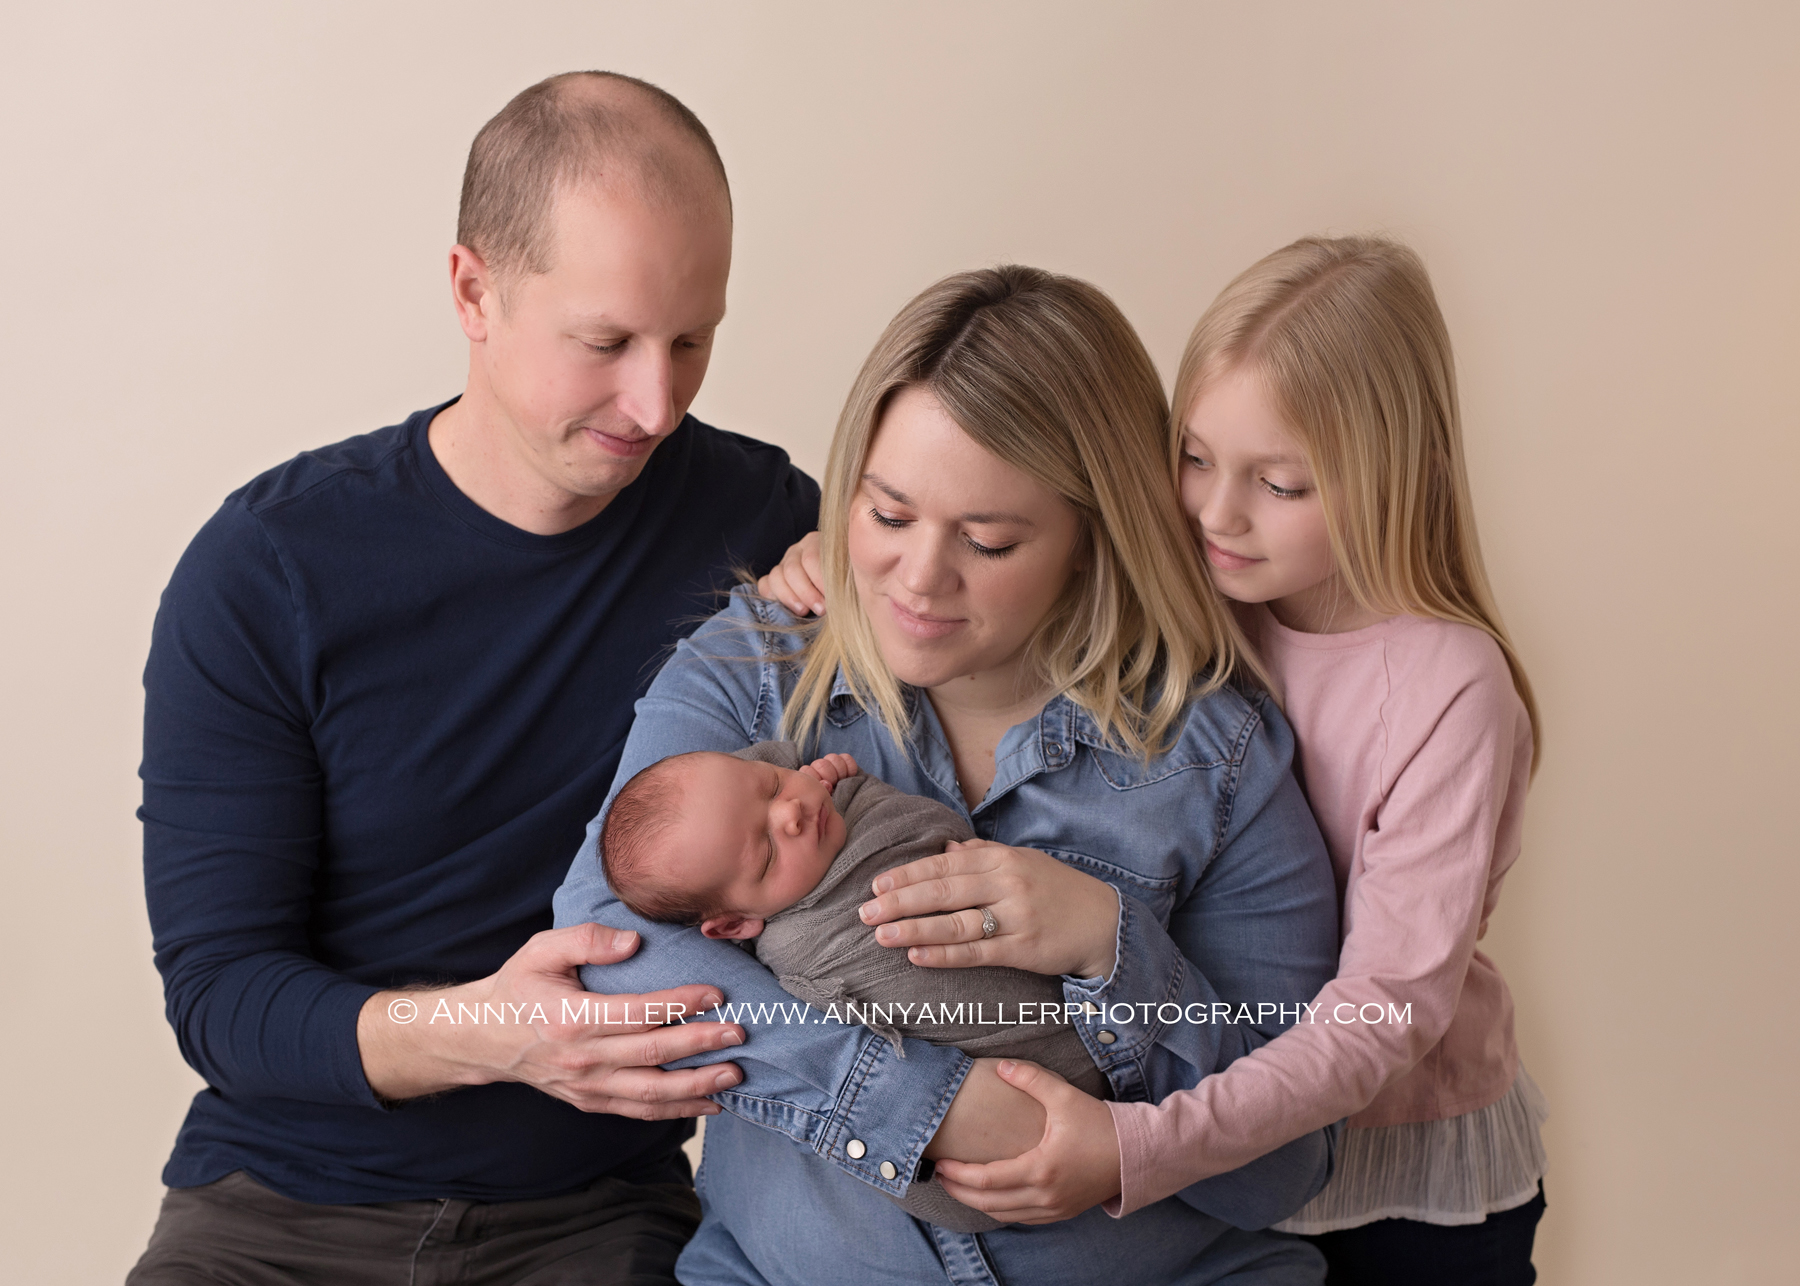 Newborn portrait of baby boy and family by Toronto newborn photographer Annya Miller 